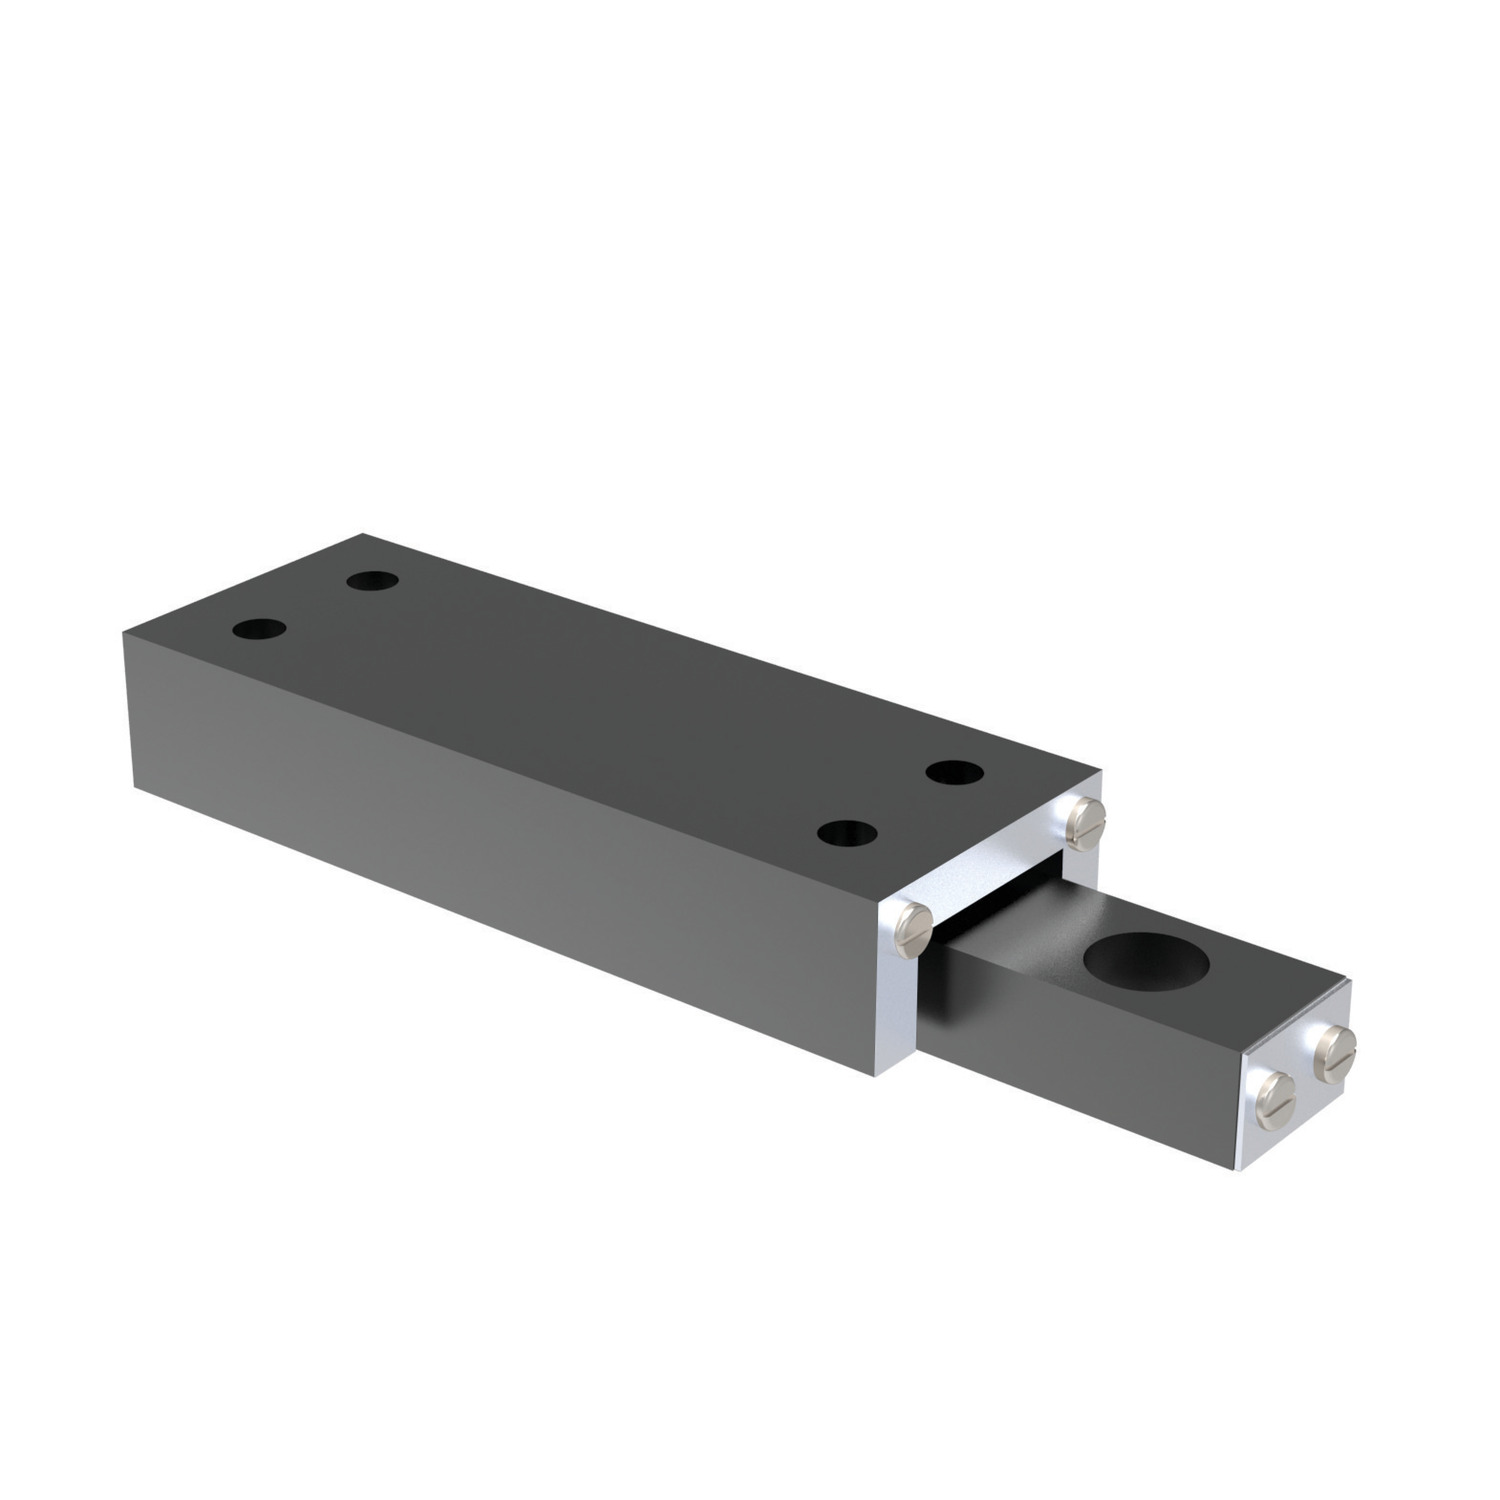 Product L1026, Crossed Roller Slides standard precision / 